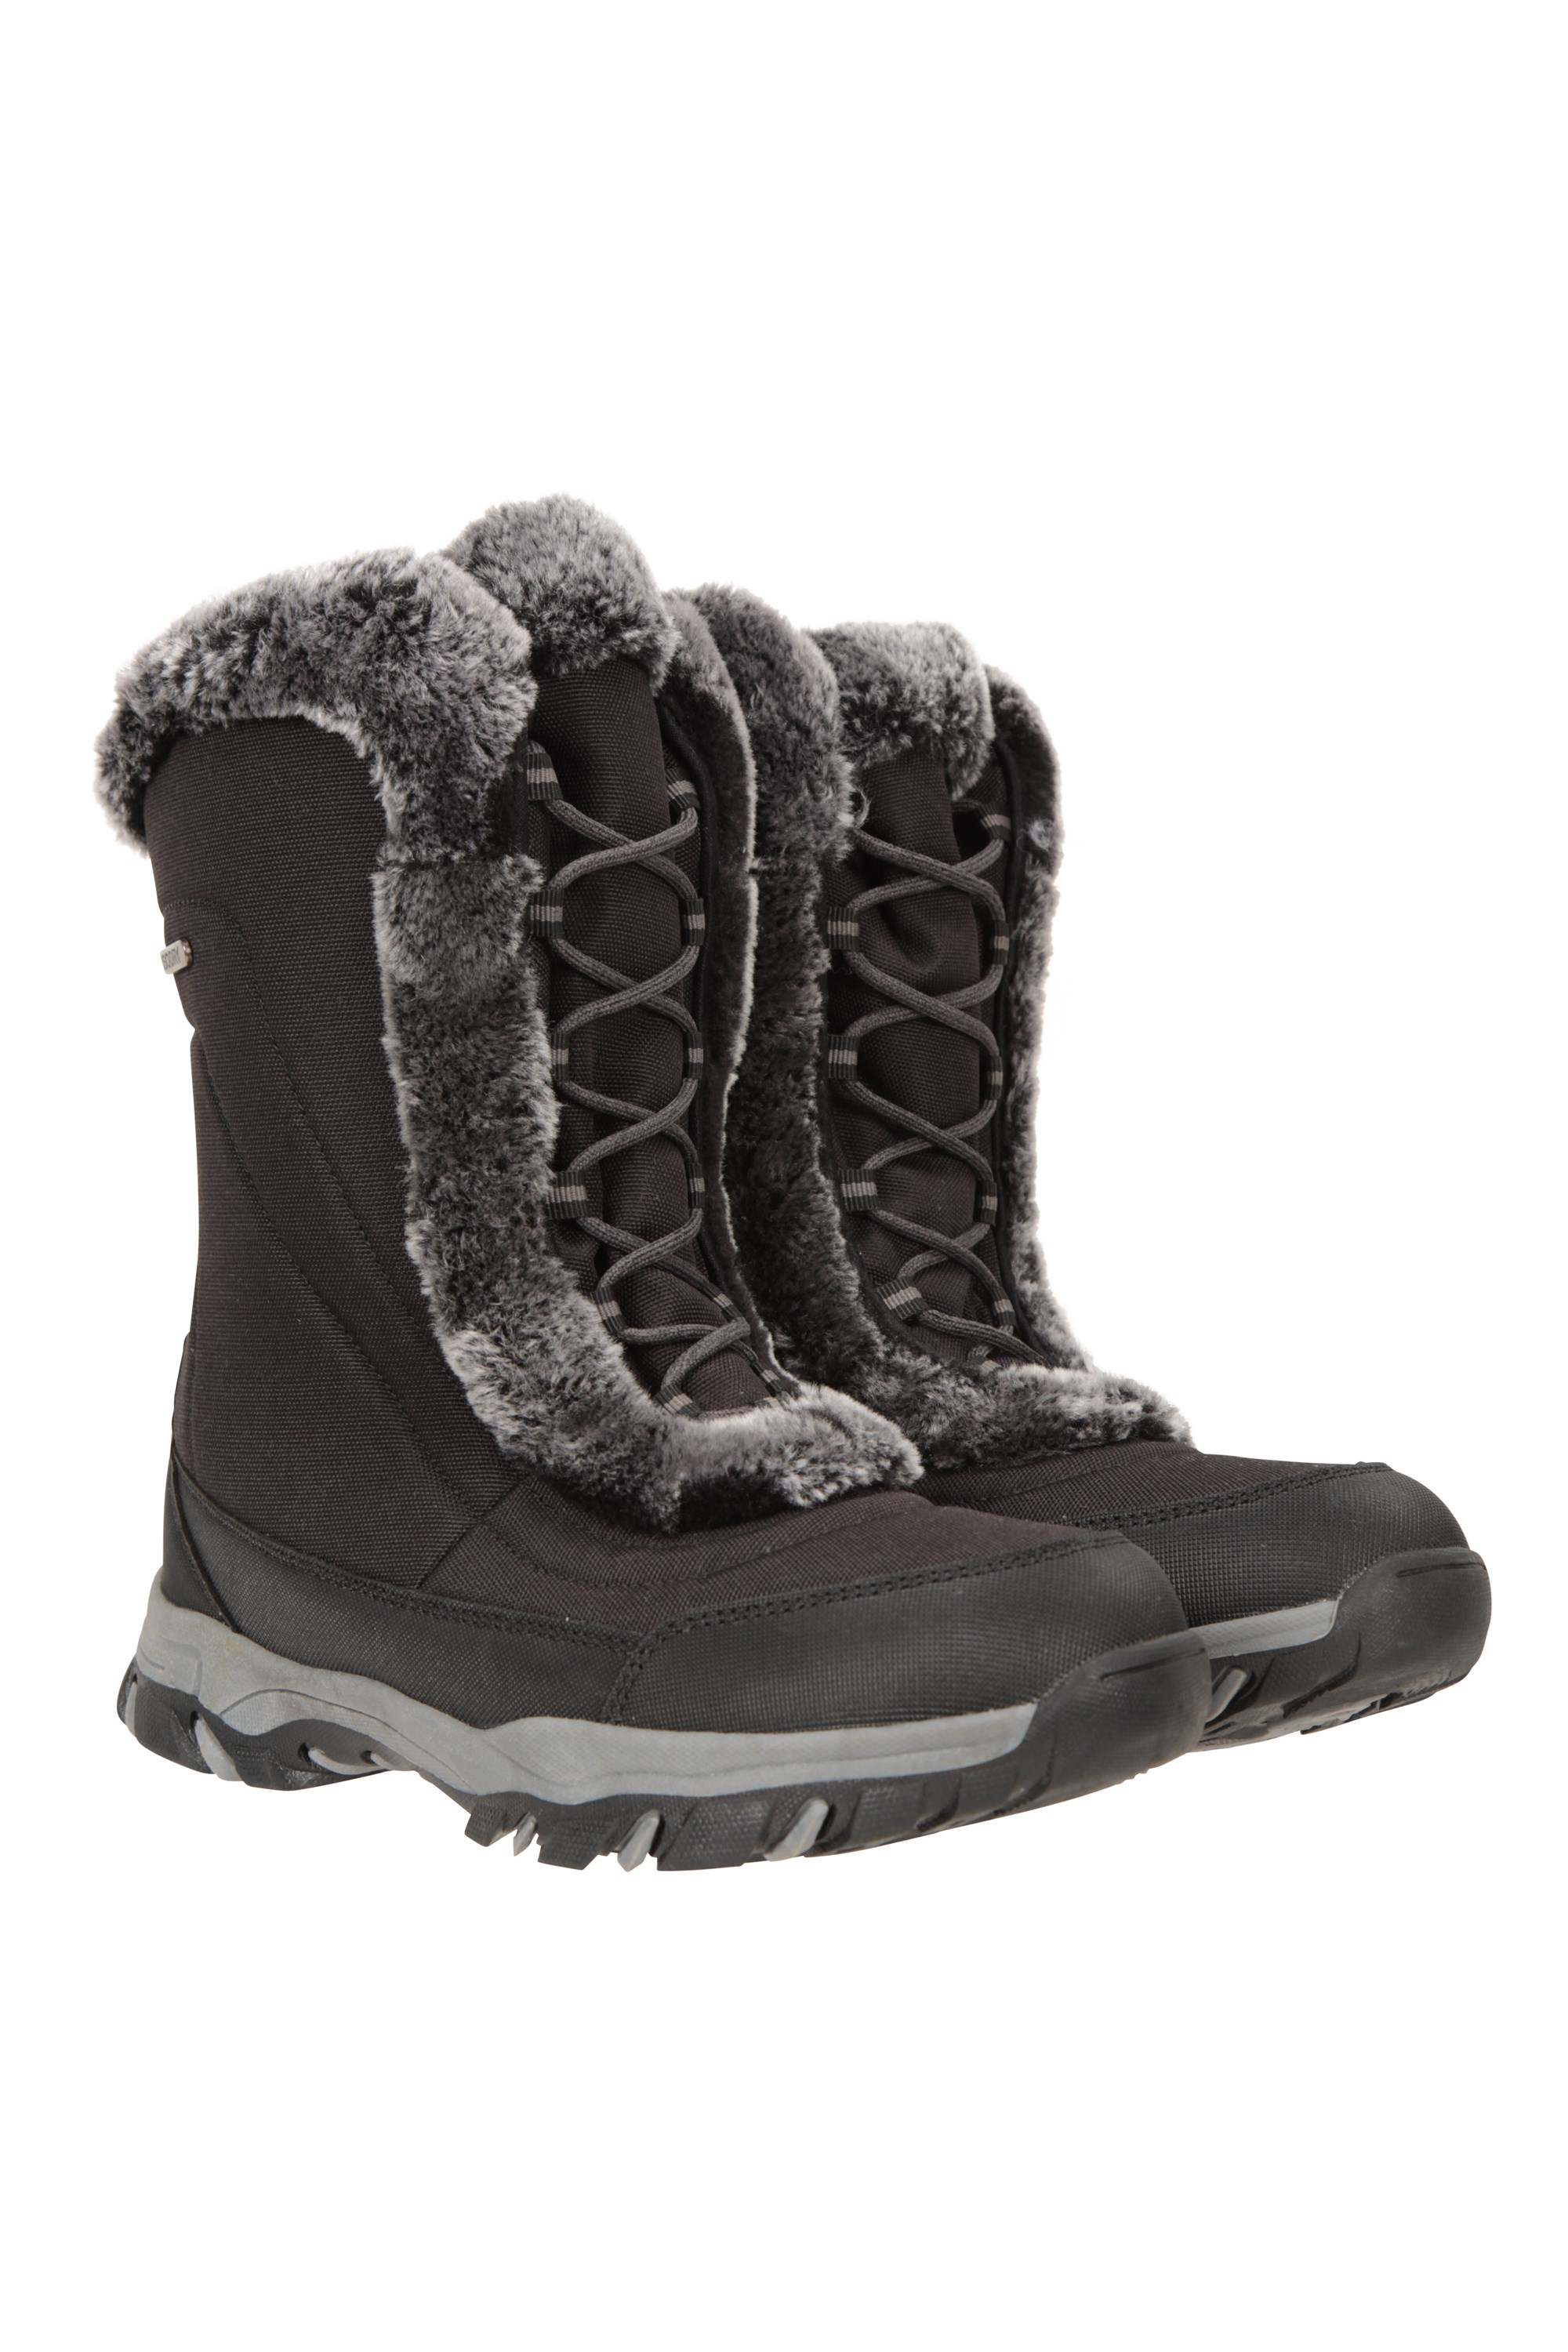 Ohio Womens Snow Boots - Black